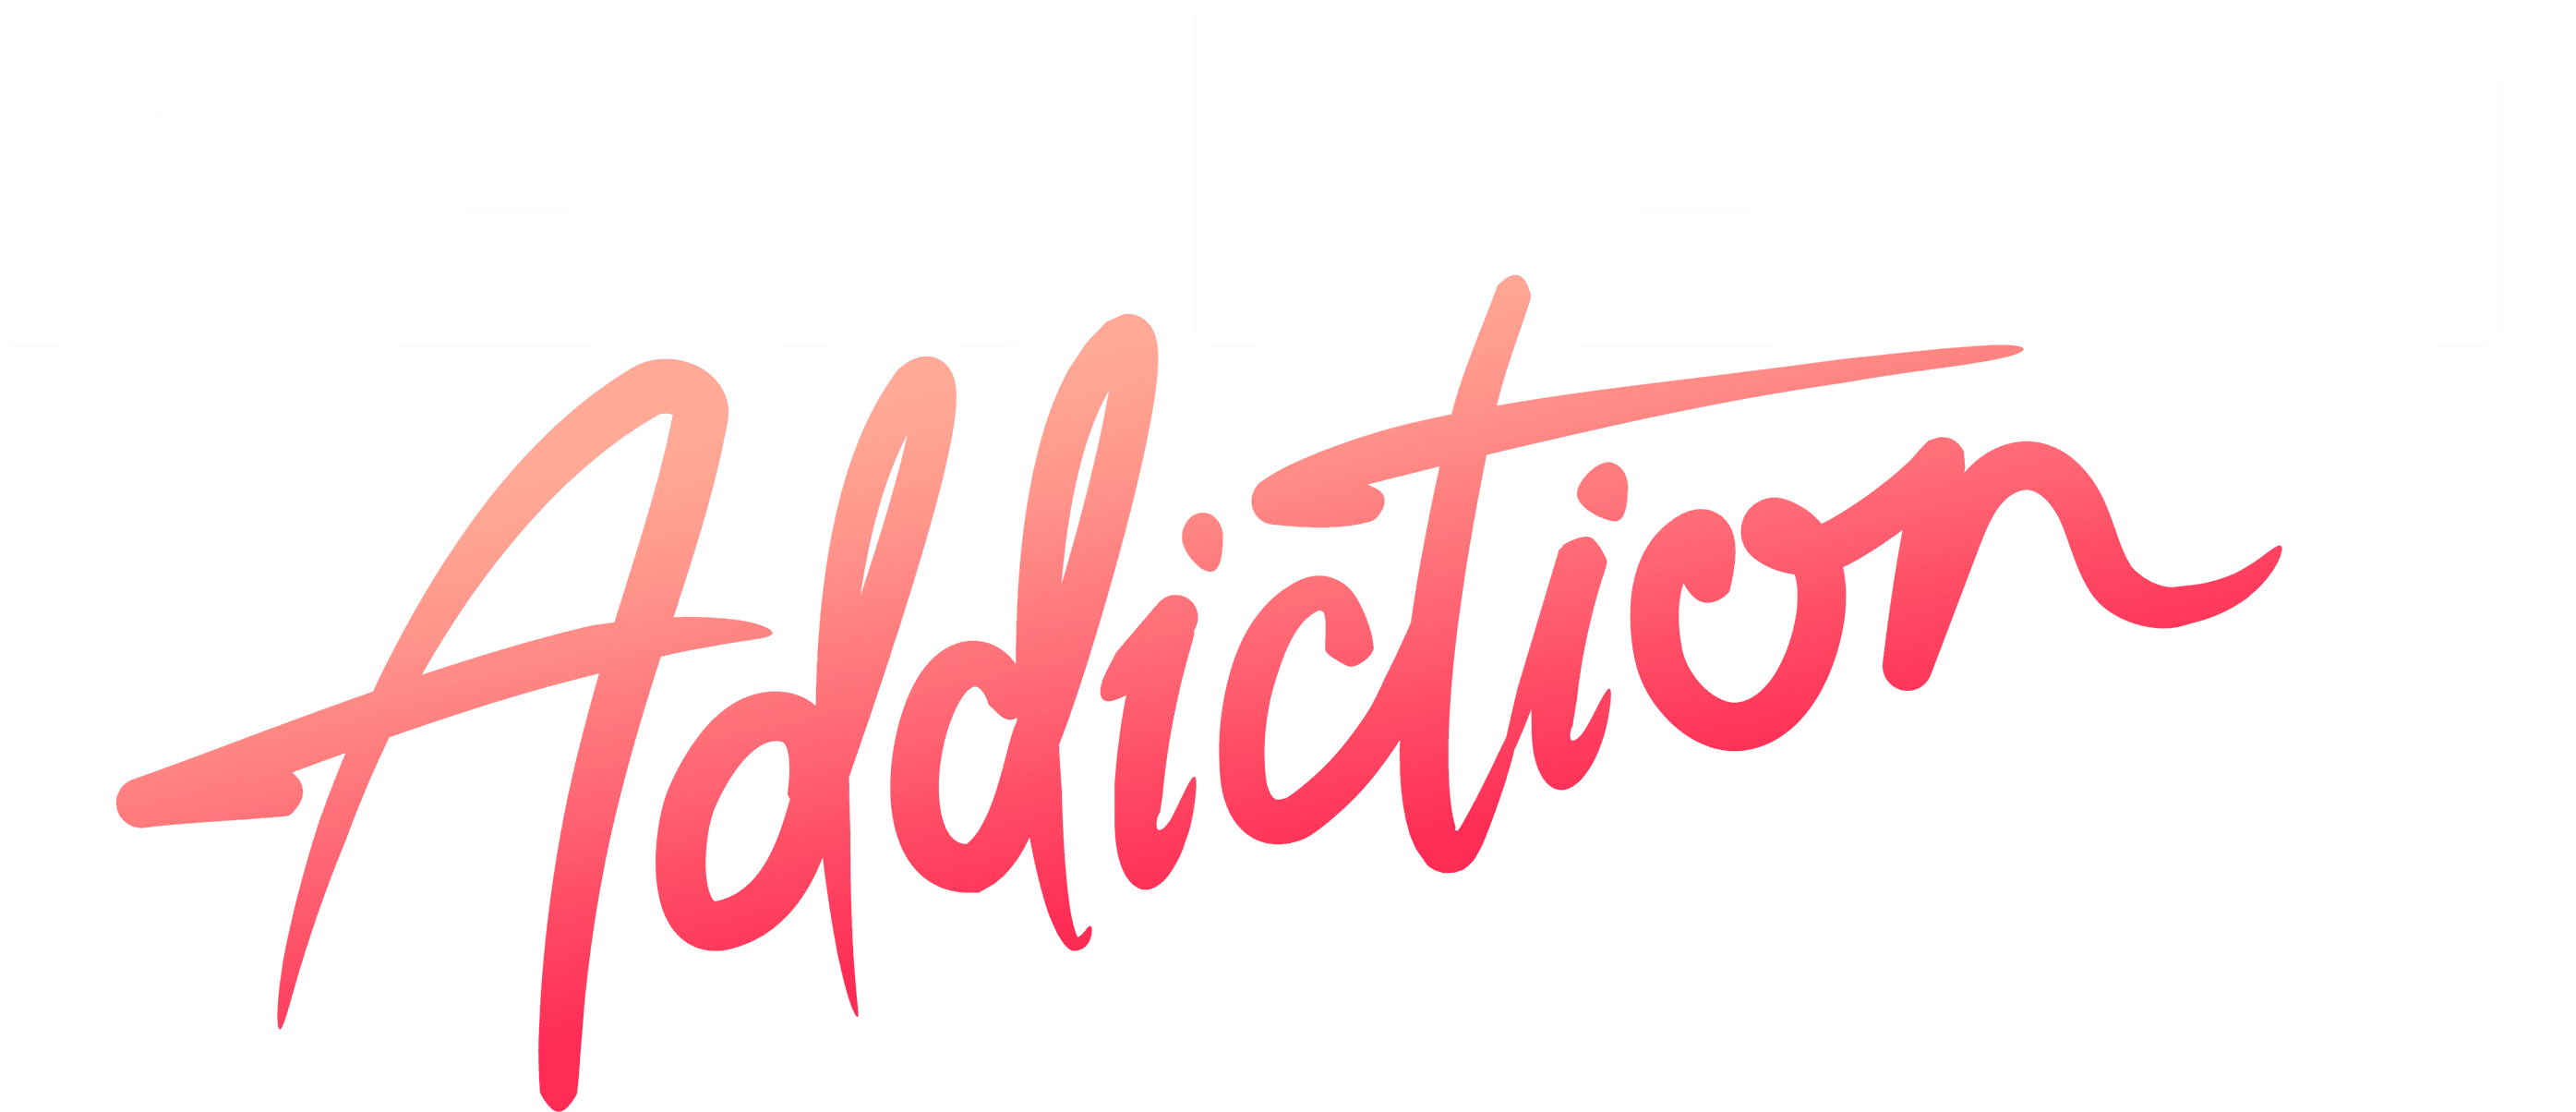 Perfect Addiction logo